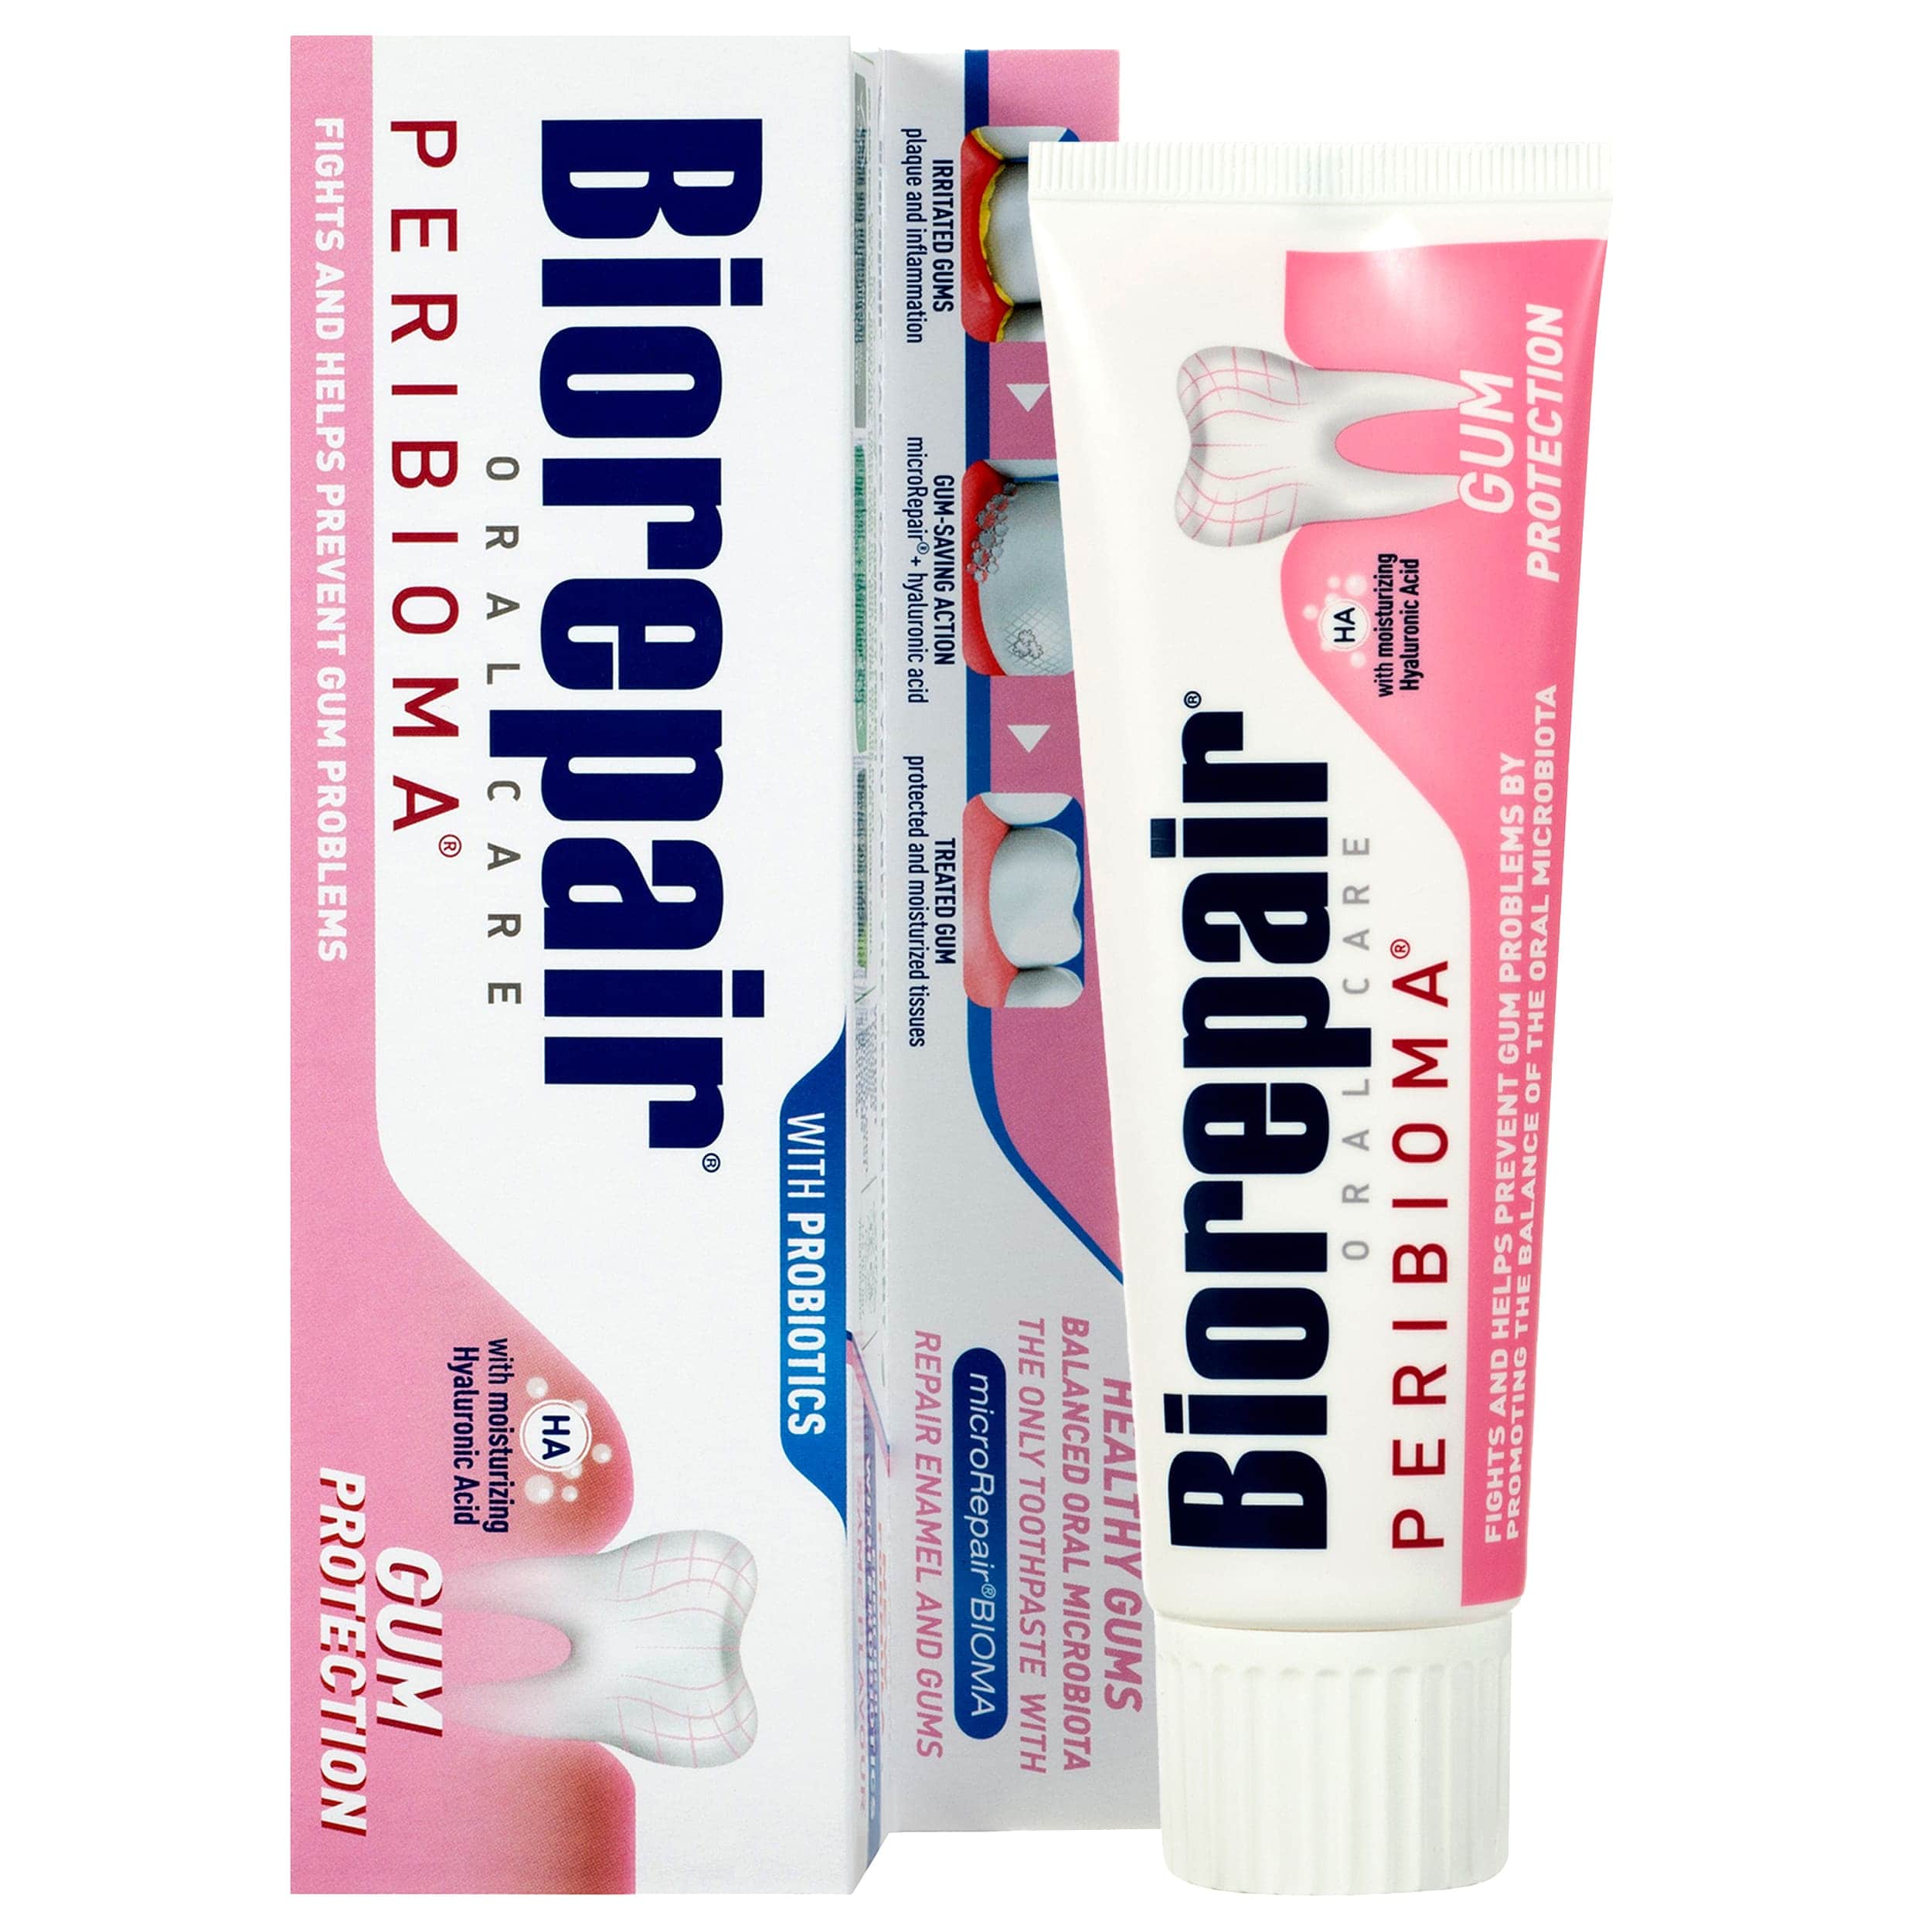 Biorepair Зубная паста для защиты десен Peribioma Gum Protection, 75 мл (Biorepair, Чувствительные зубы) зубная паста biorepair total protection 75 мл